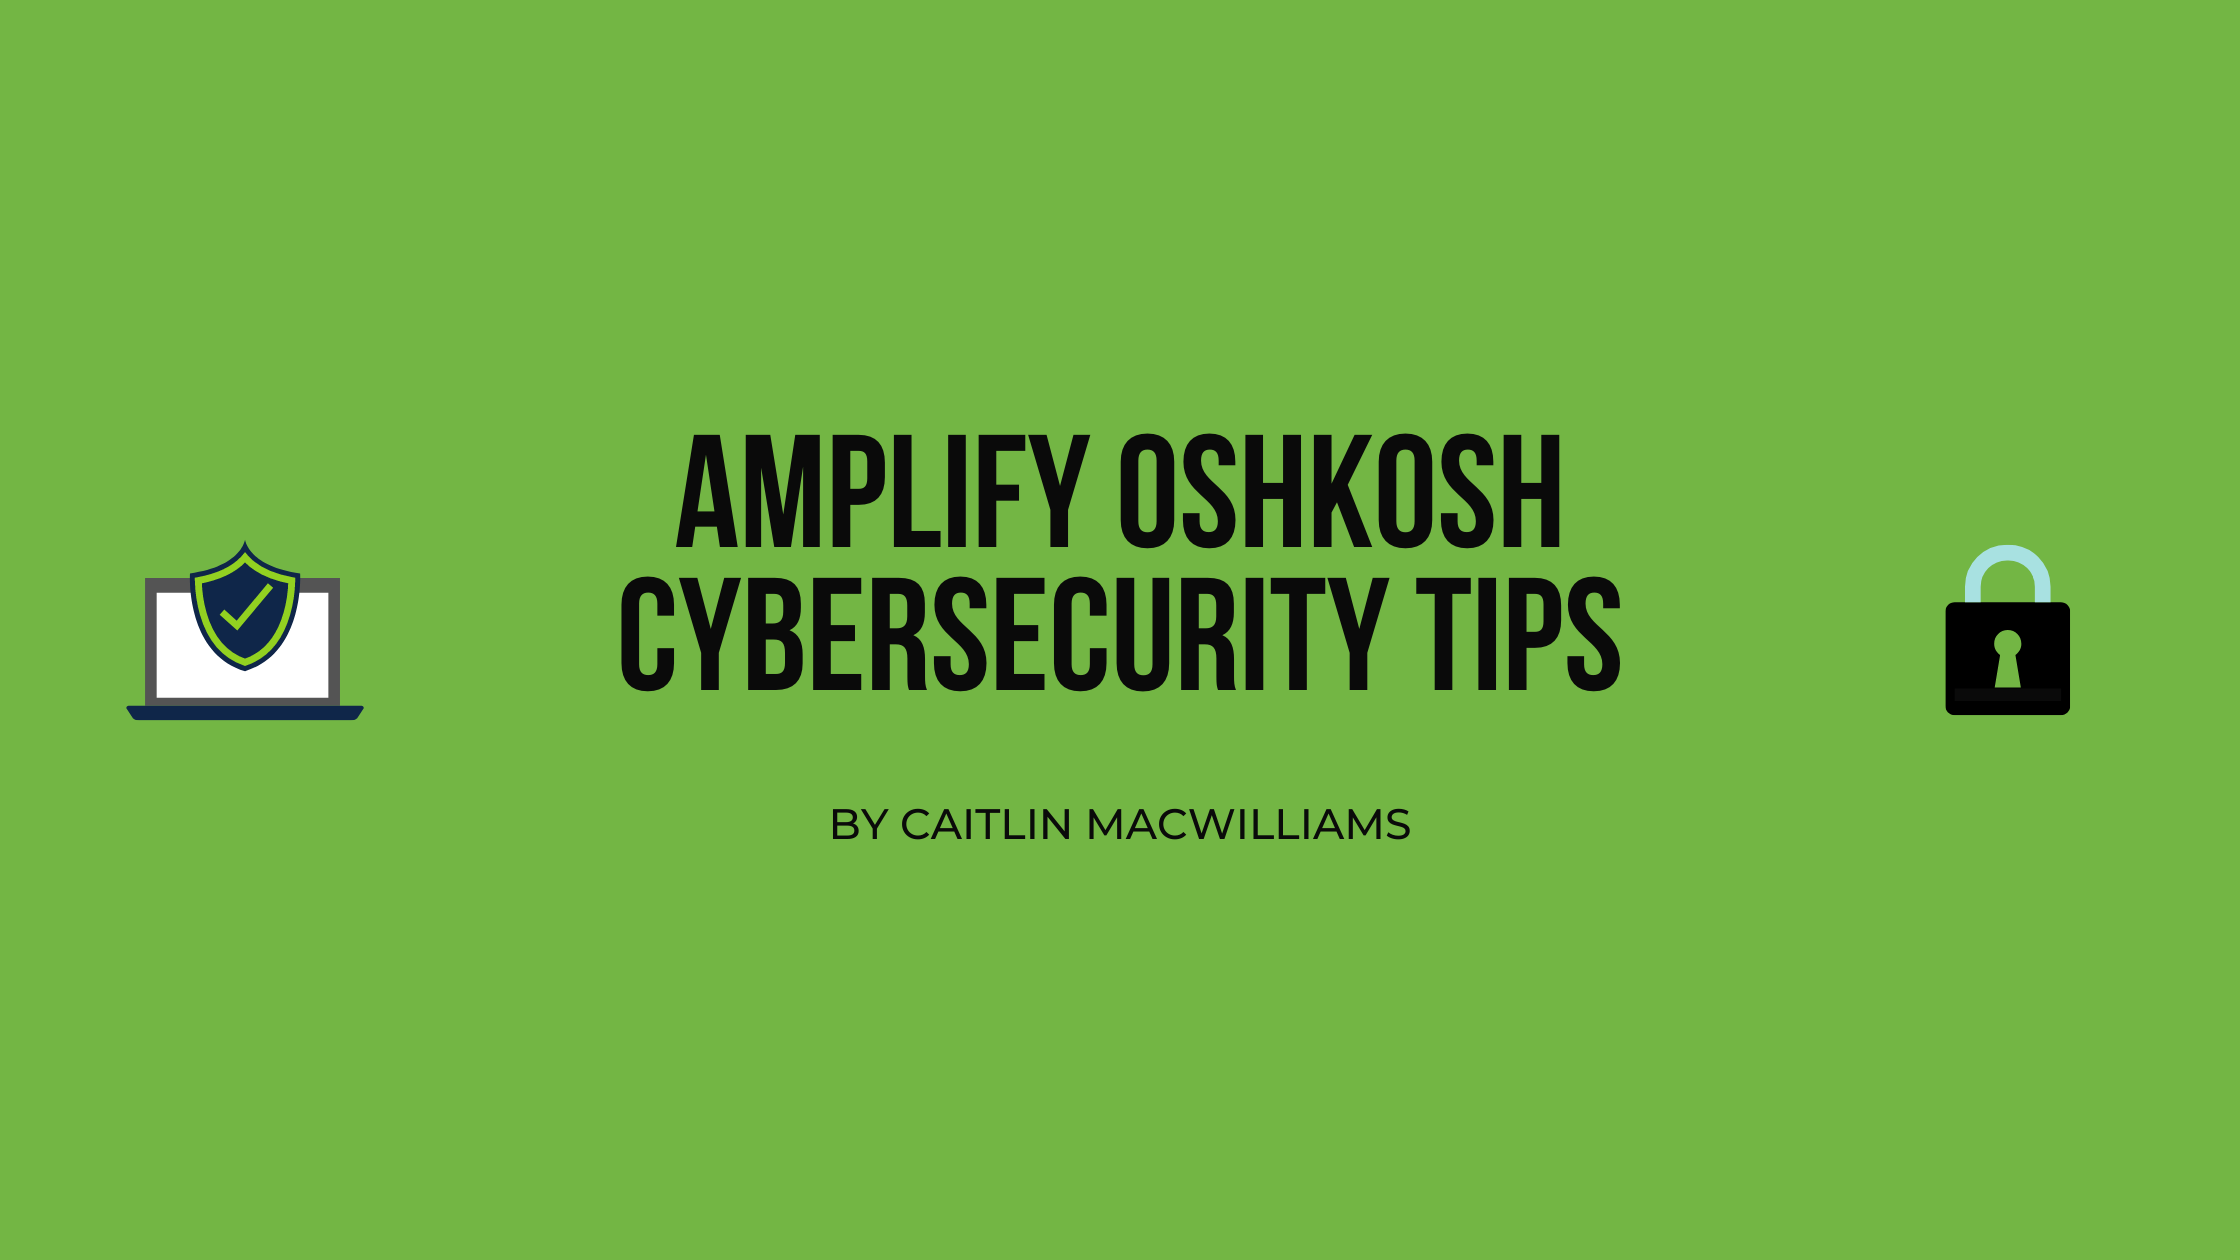 Amplify Oshkosh Cybersecurity Tips